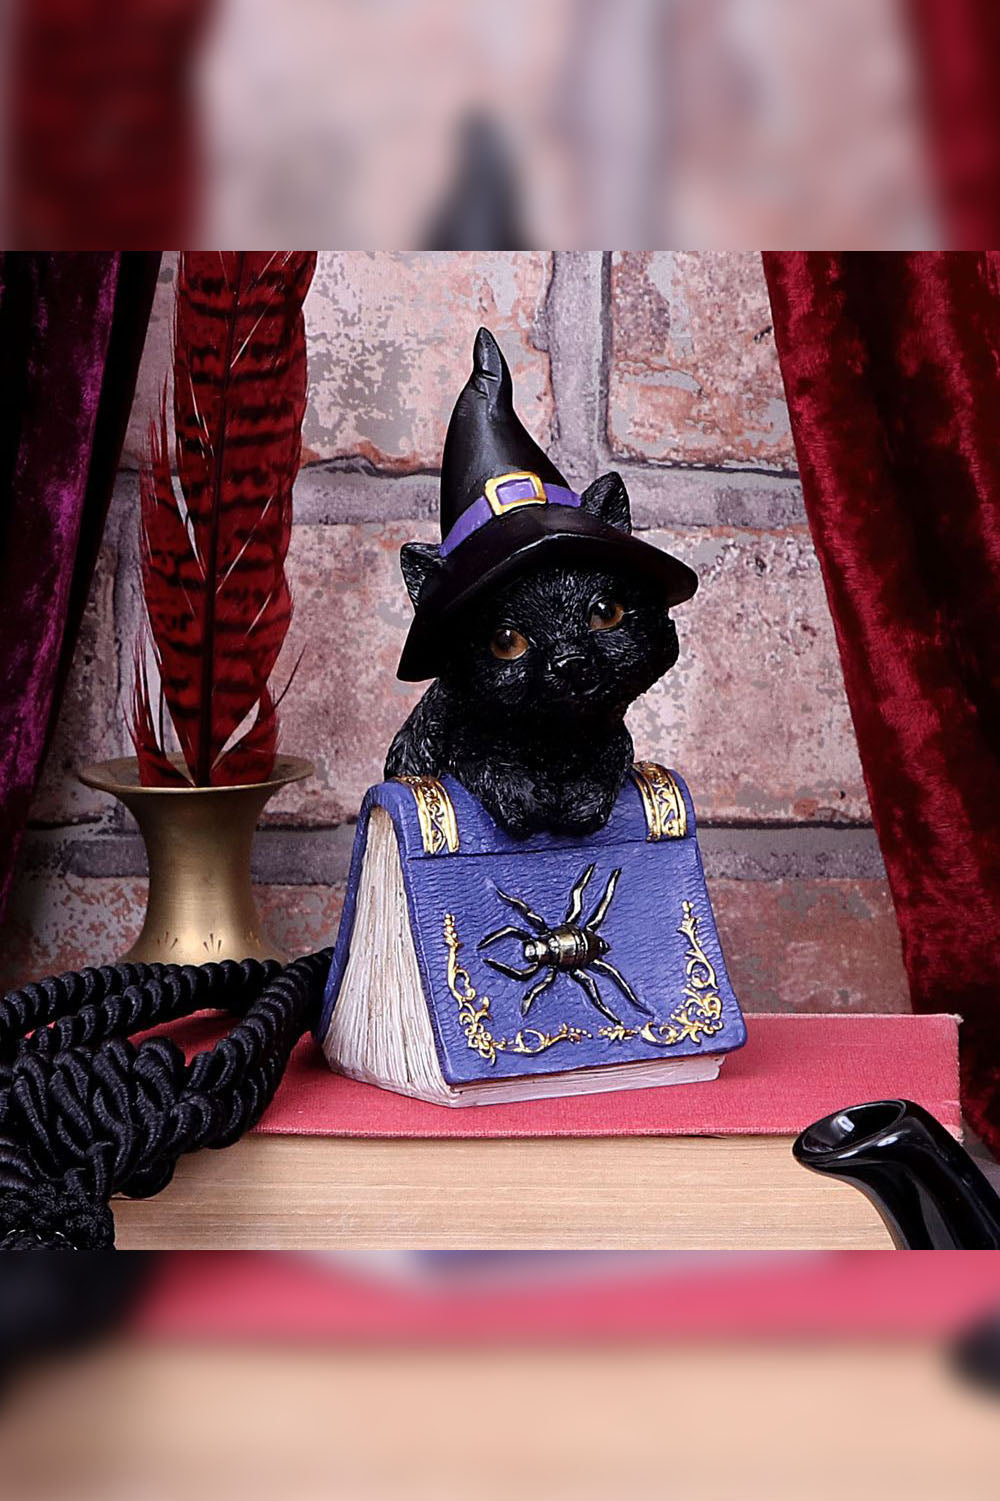 Pocus Black Cat Witch and Spellbook Figurine